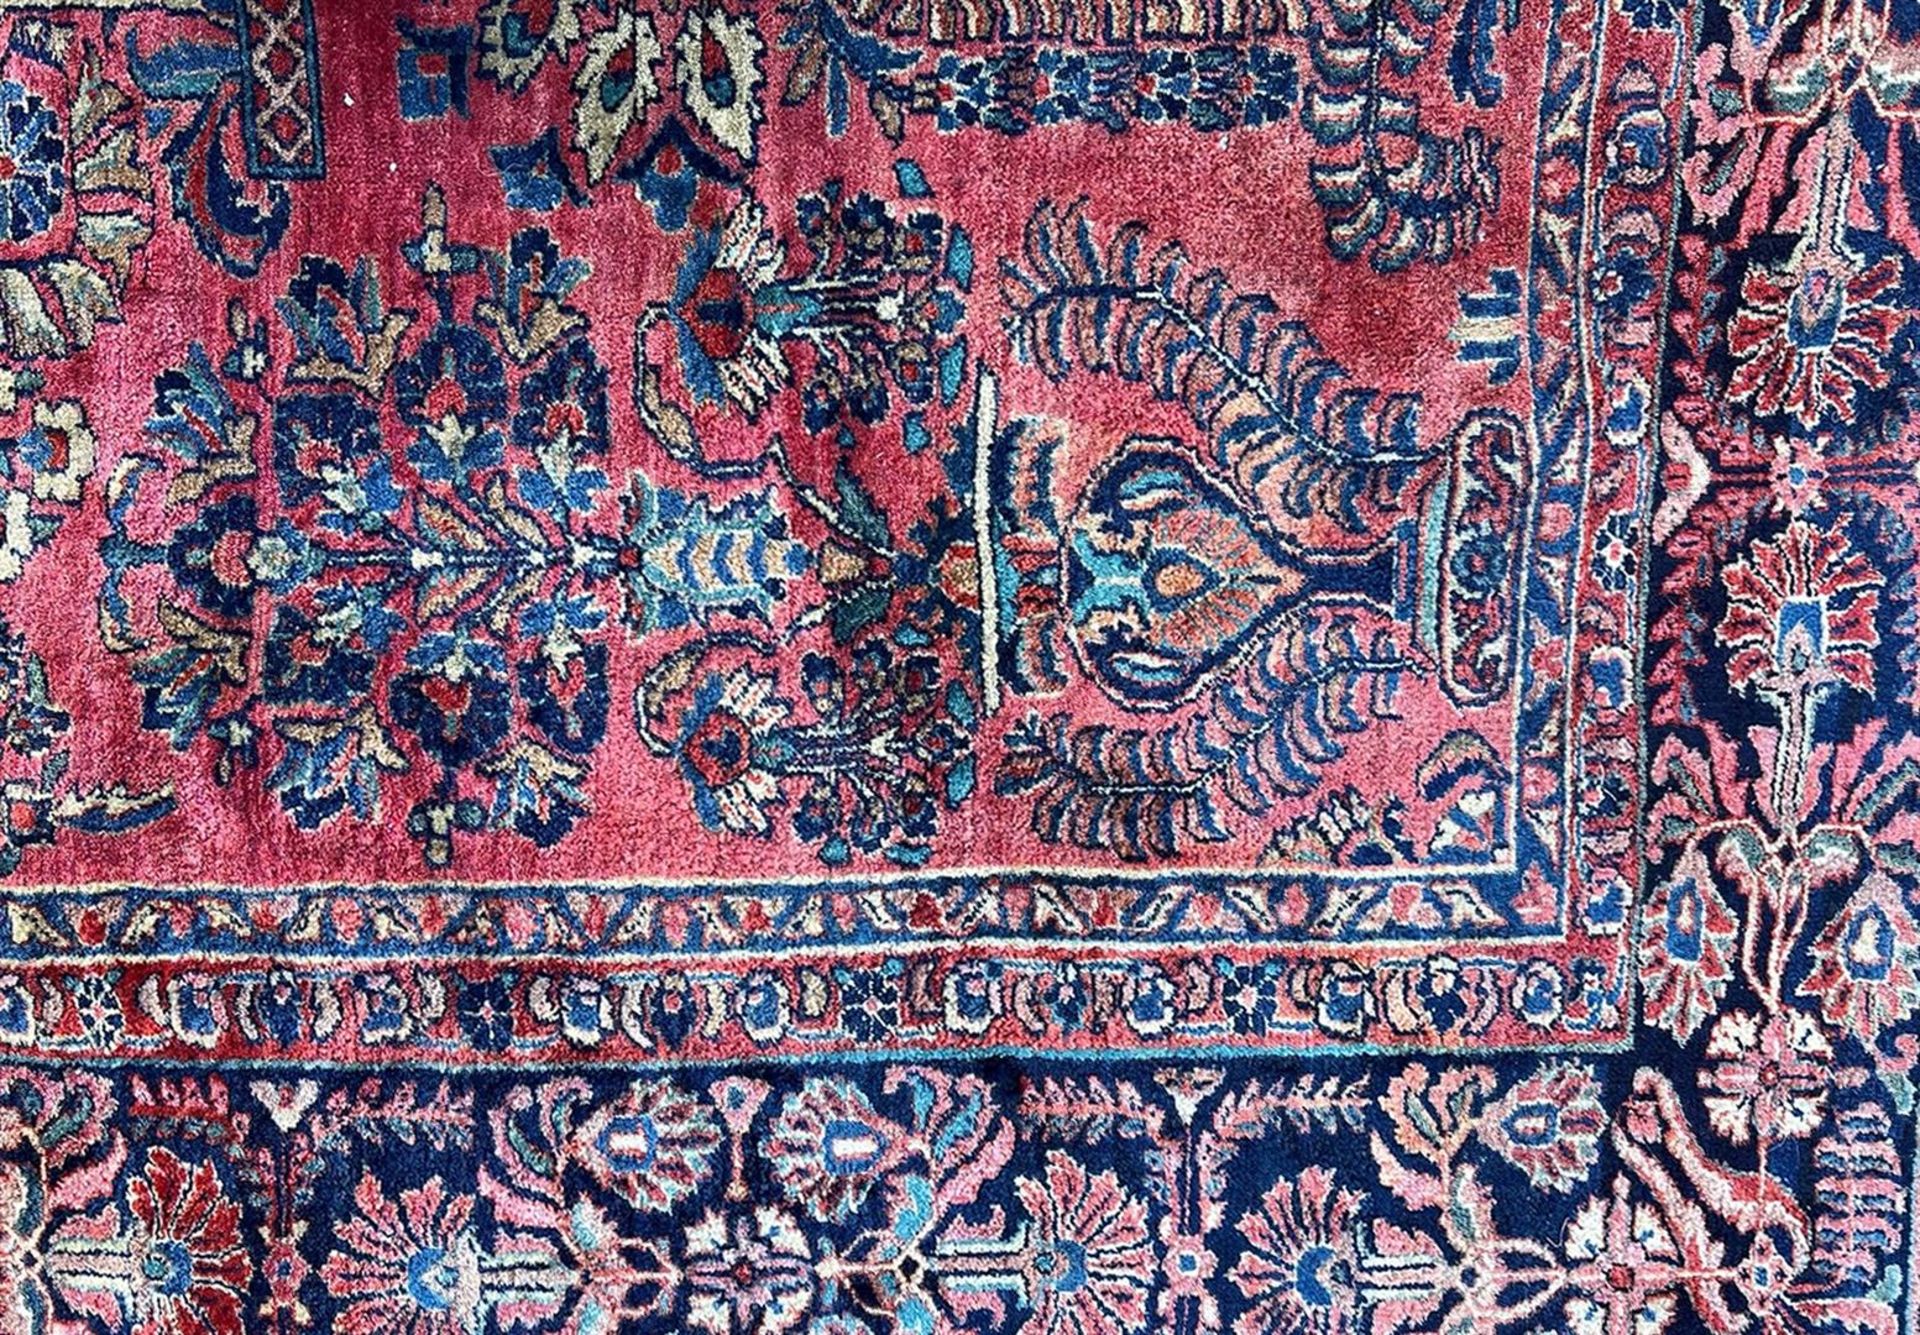 Oriental carpet - Image 3 of 4